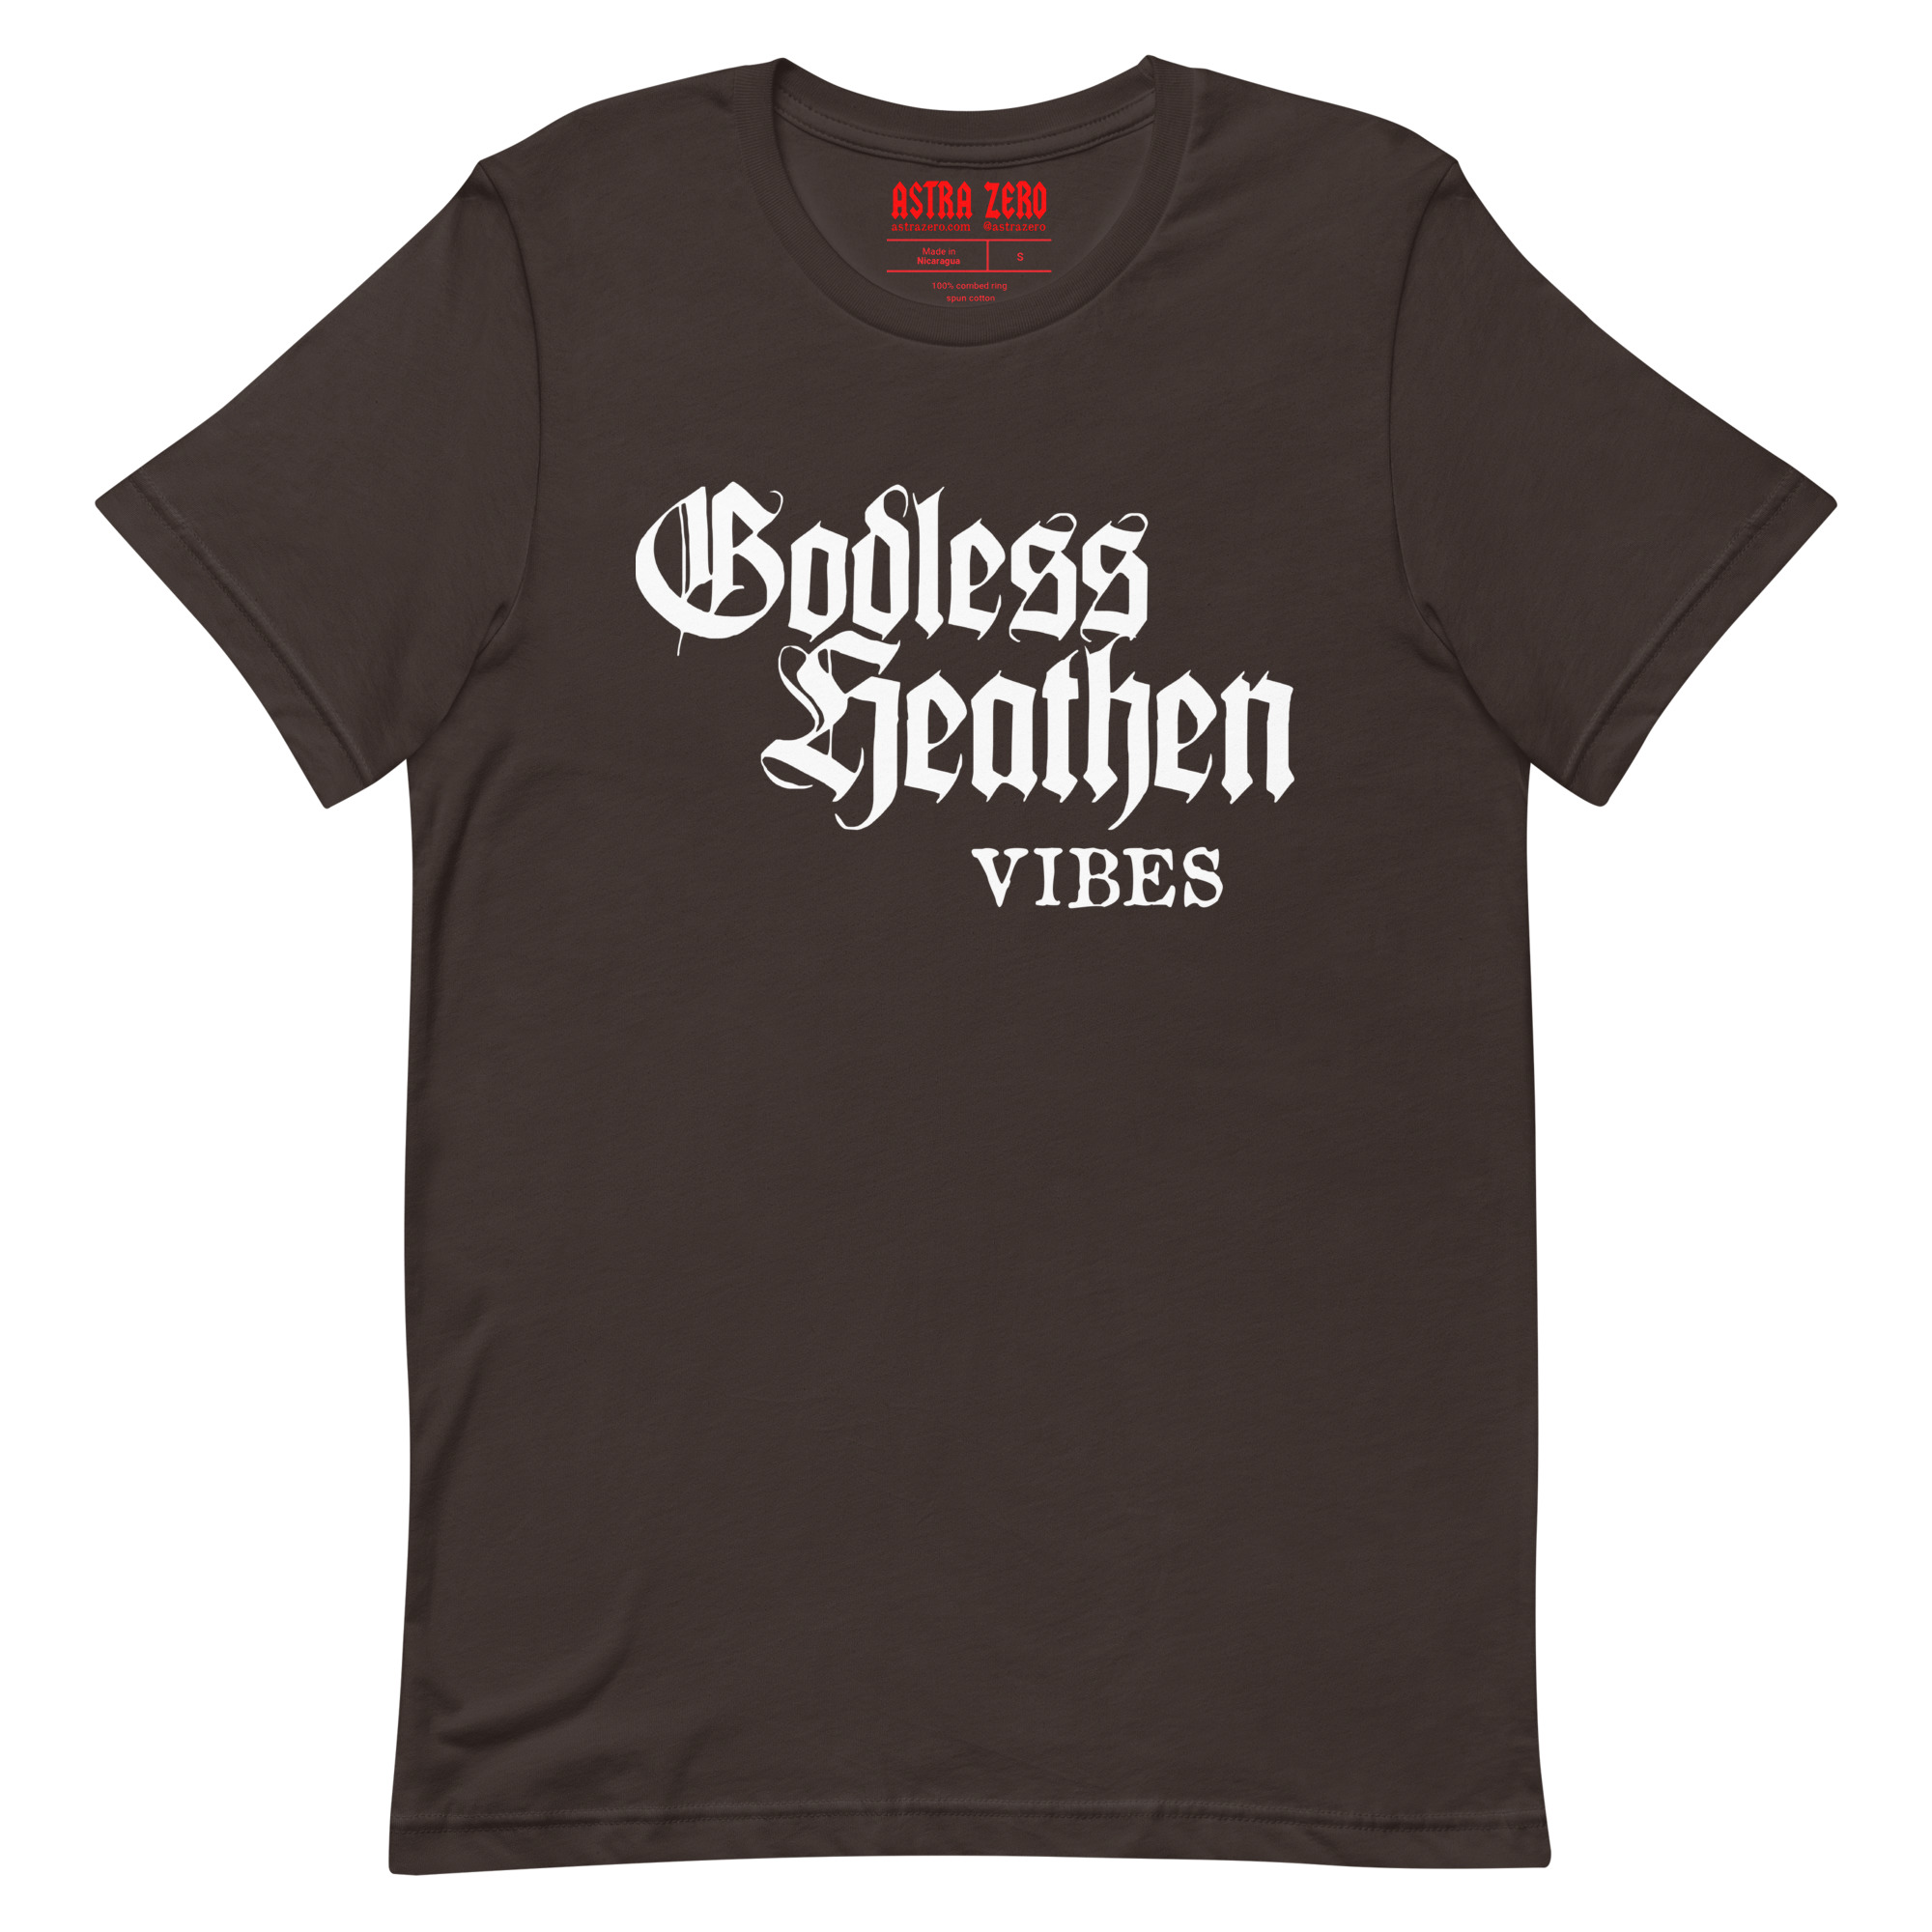 Featured image for “Godless Heathen Vibes - Unisex t-shirt”